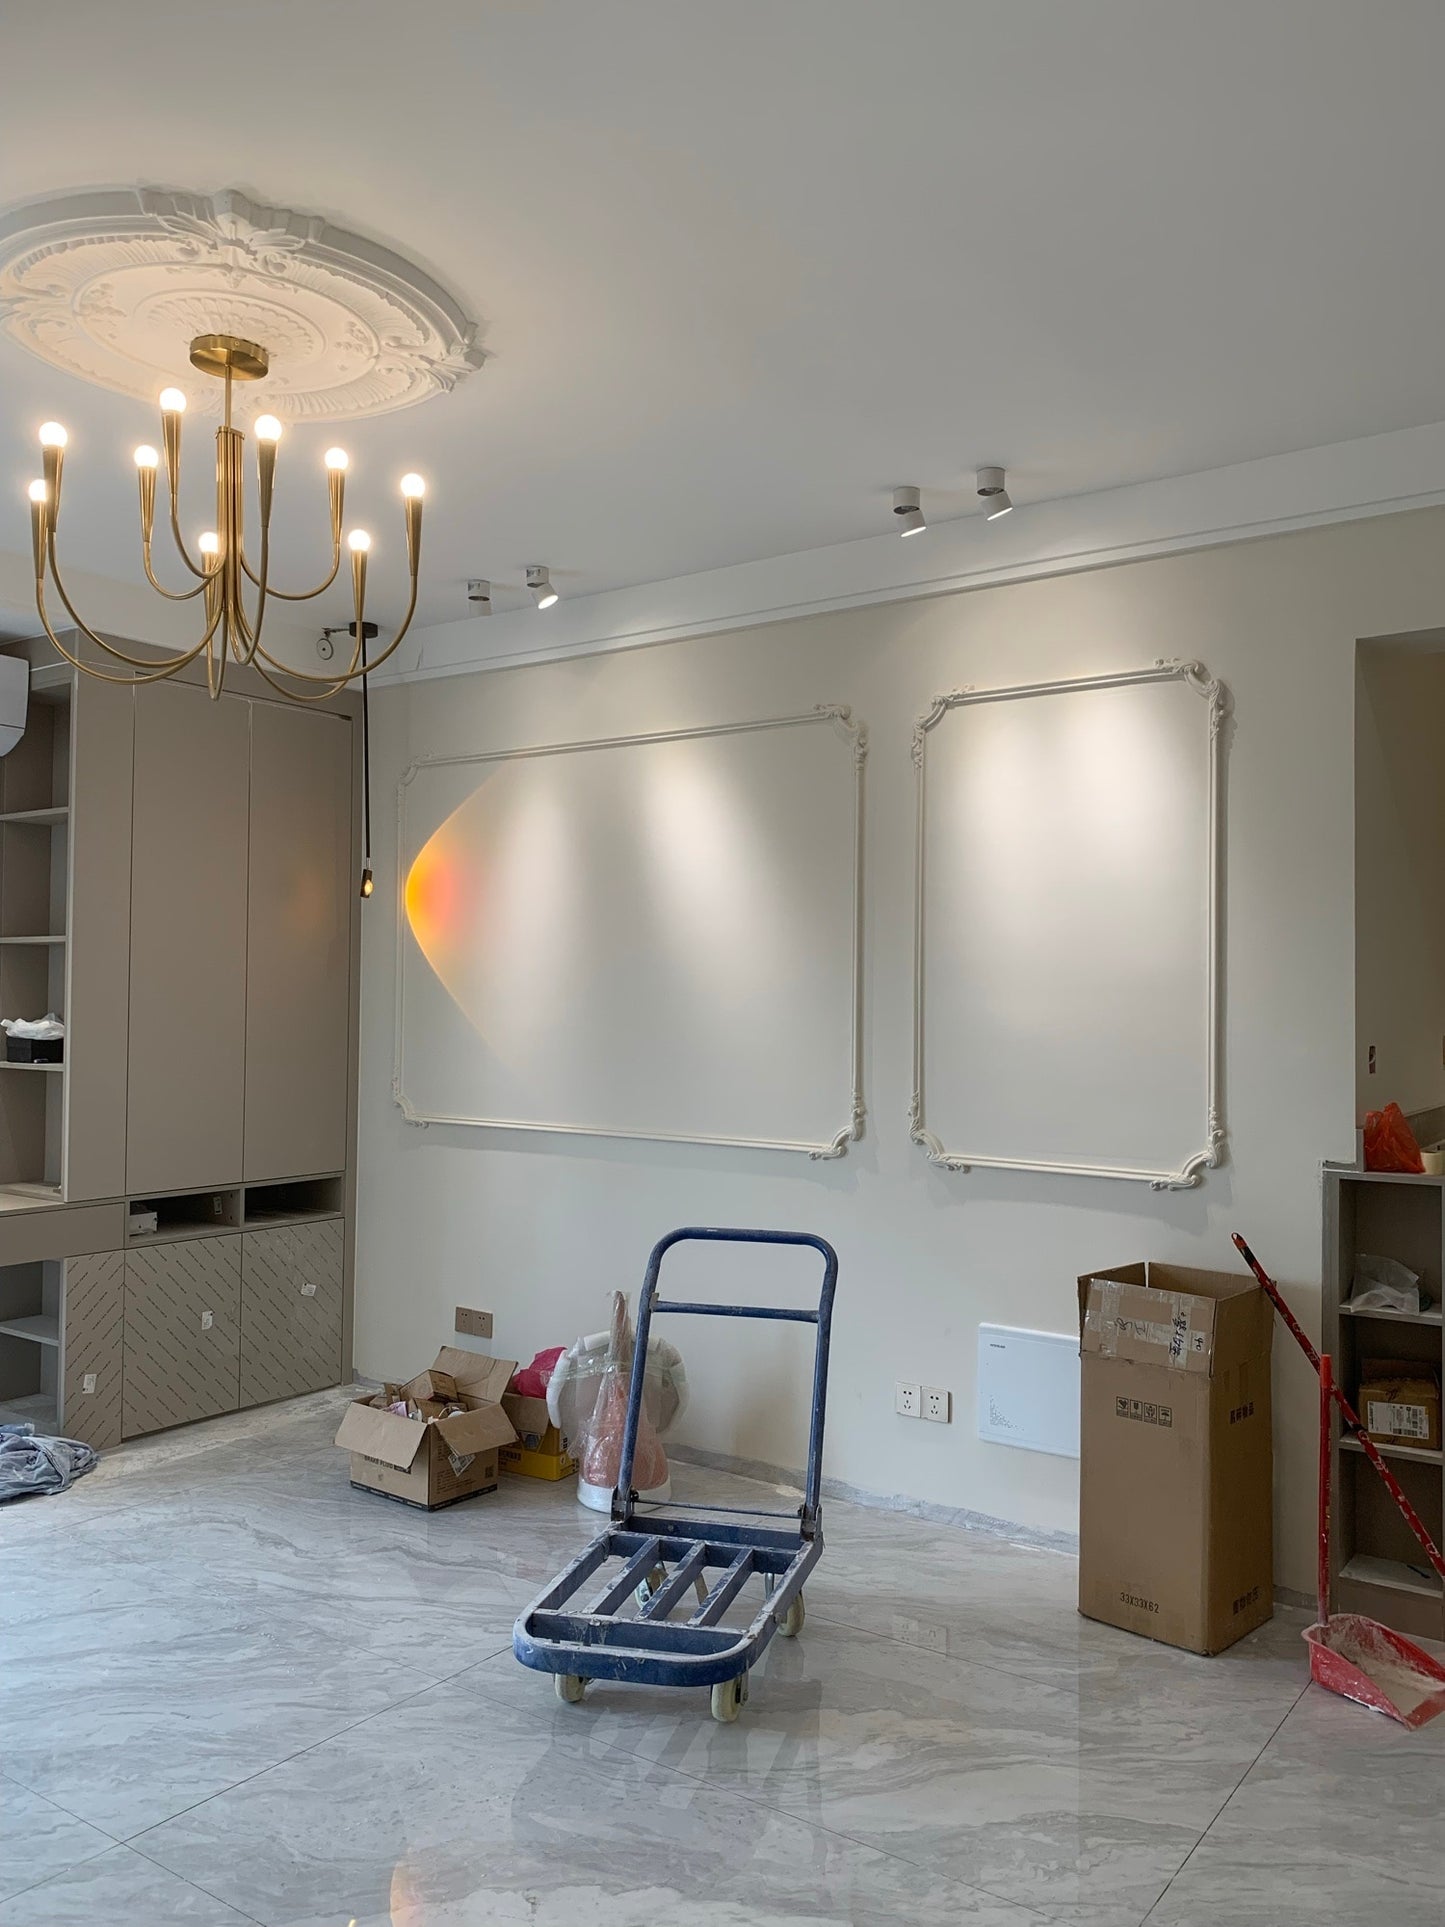 2022 new style living room lamps light luxury American retro bedroom art designer creative personality dining room chandelier